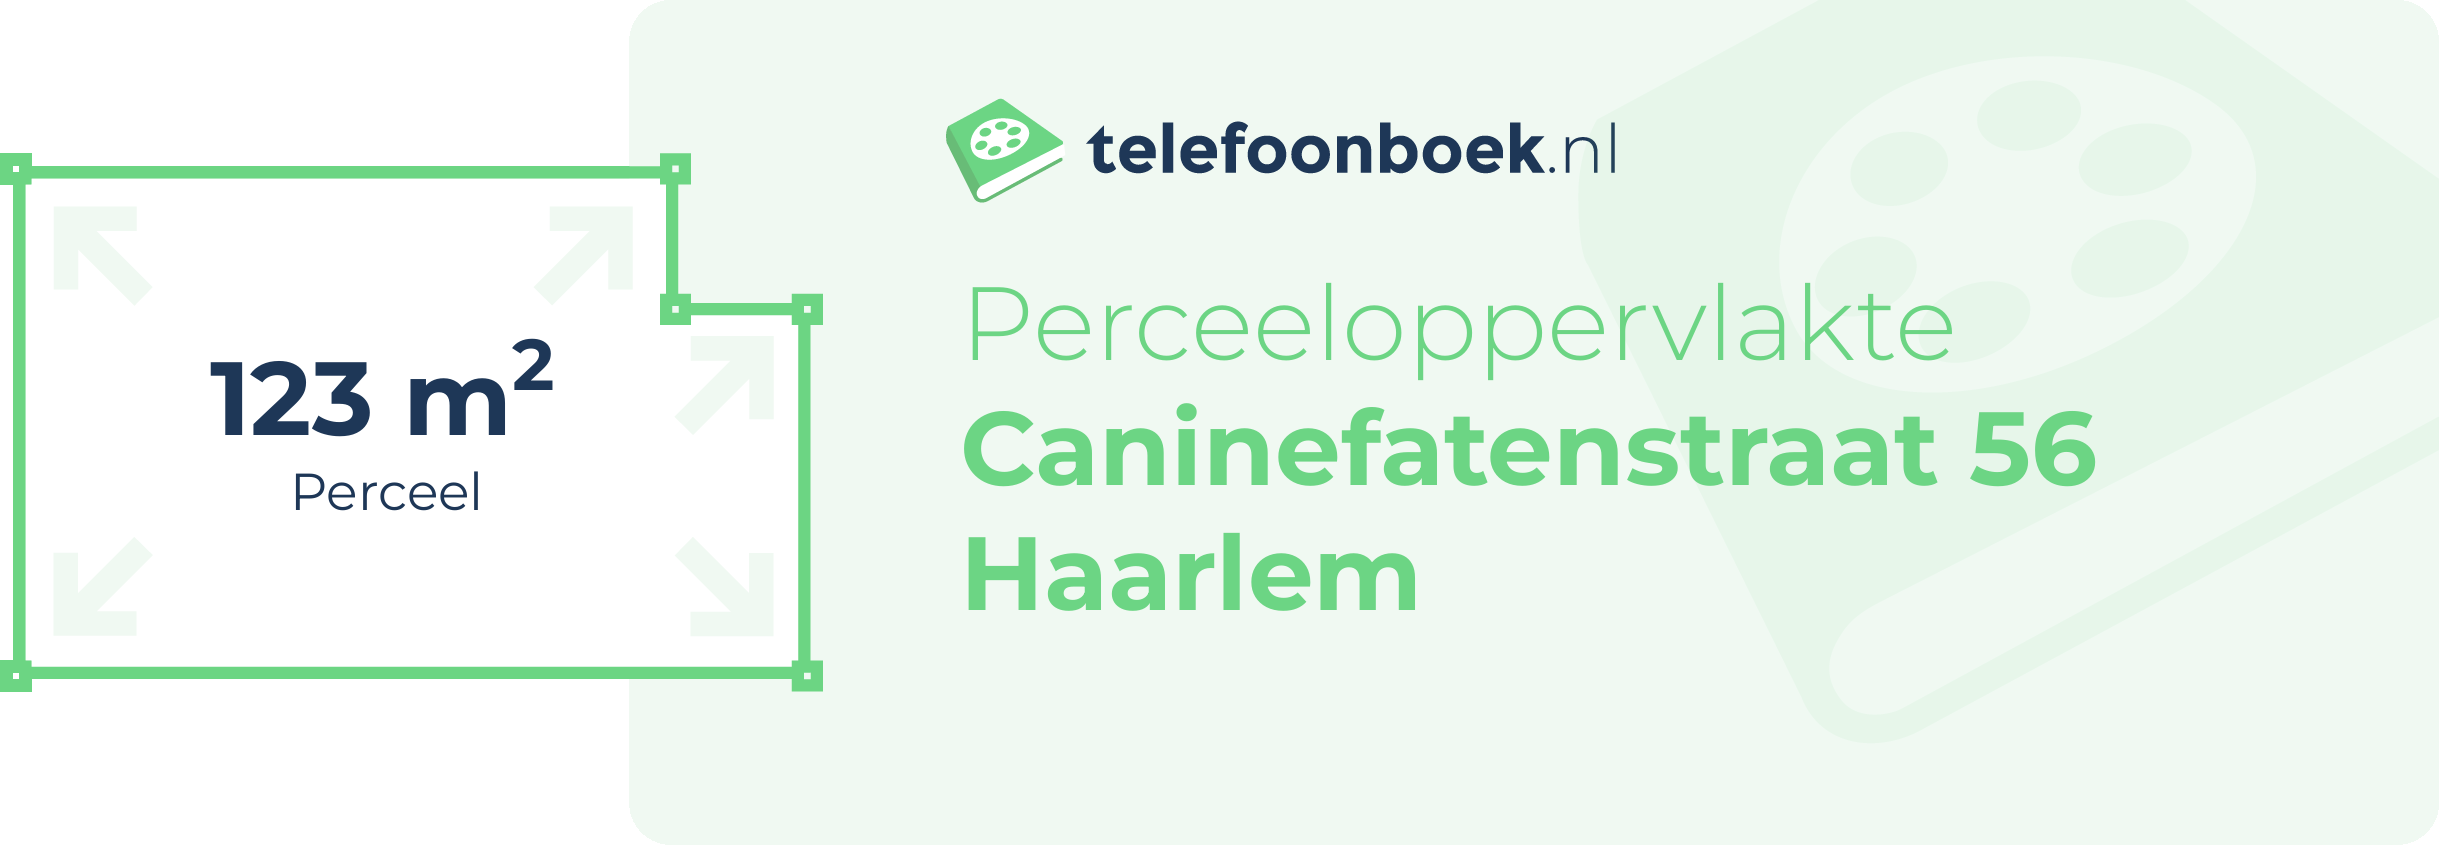 Perceeloppervlakte Caninefatenstraat 56 Haarlem